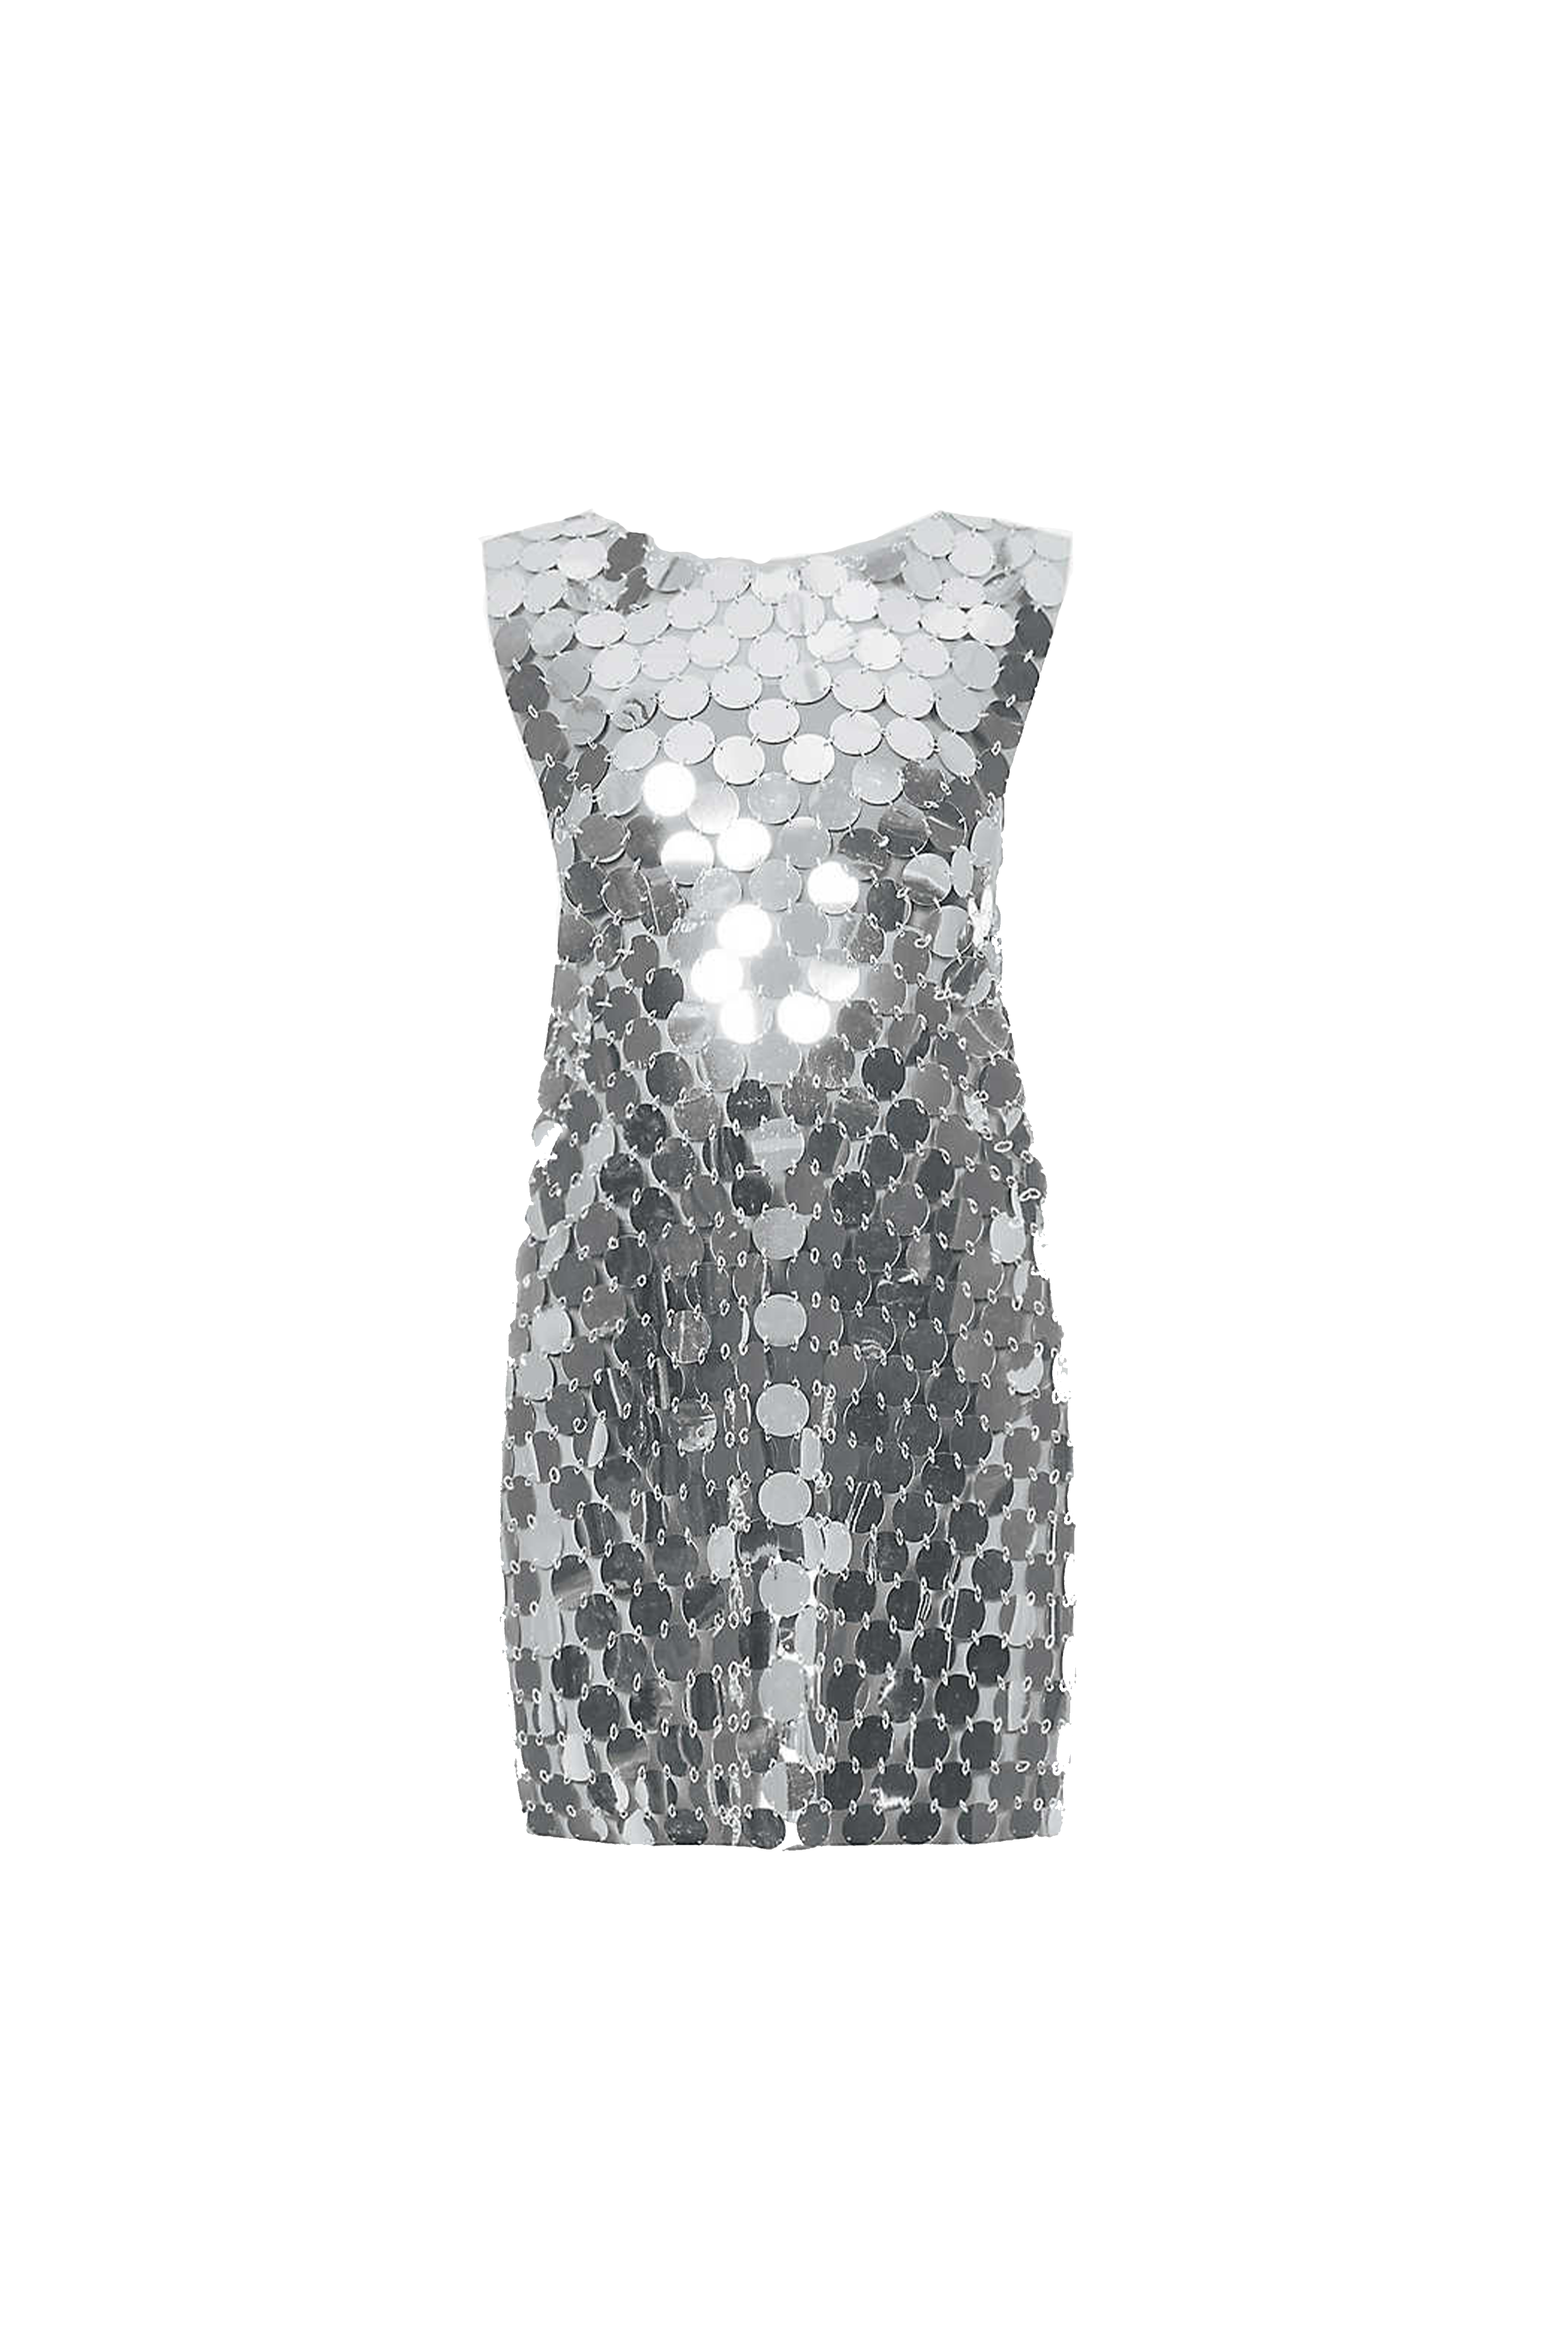 Trixie Silver Metallic Disc Sequin Shiny Shift Mini Dress